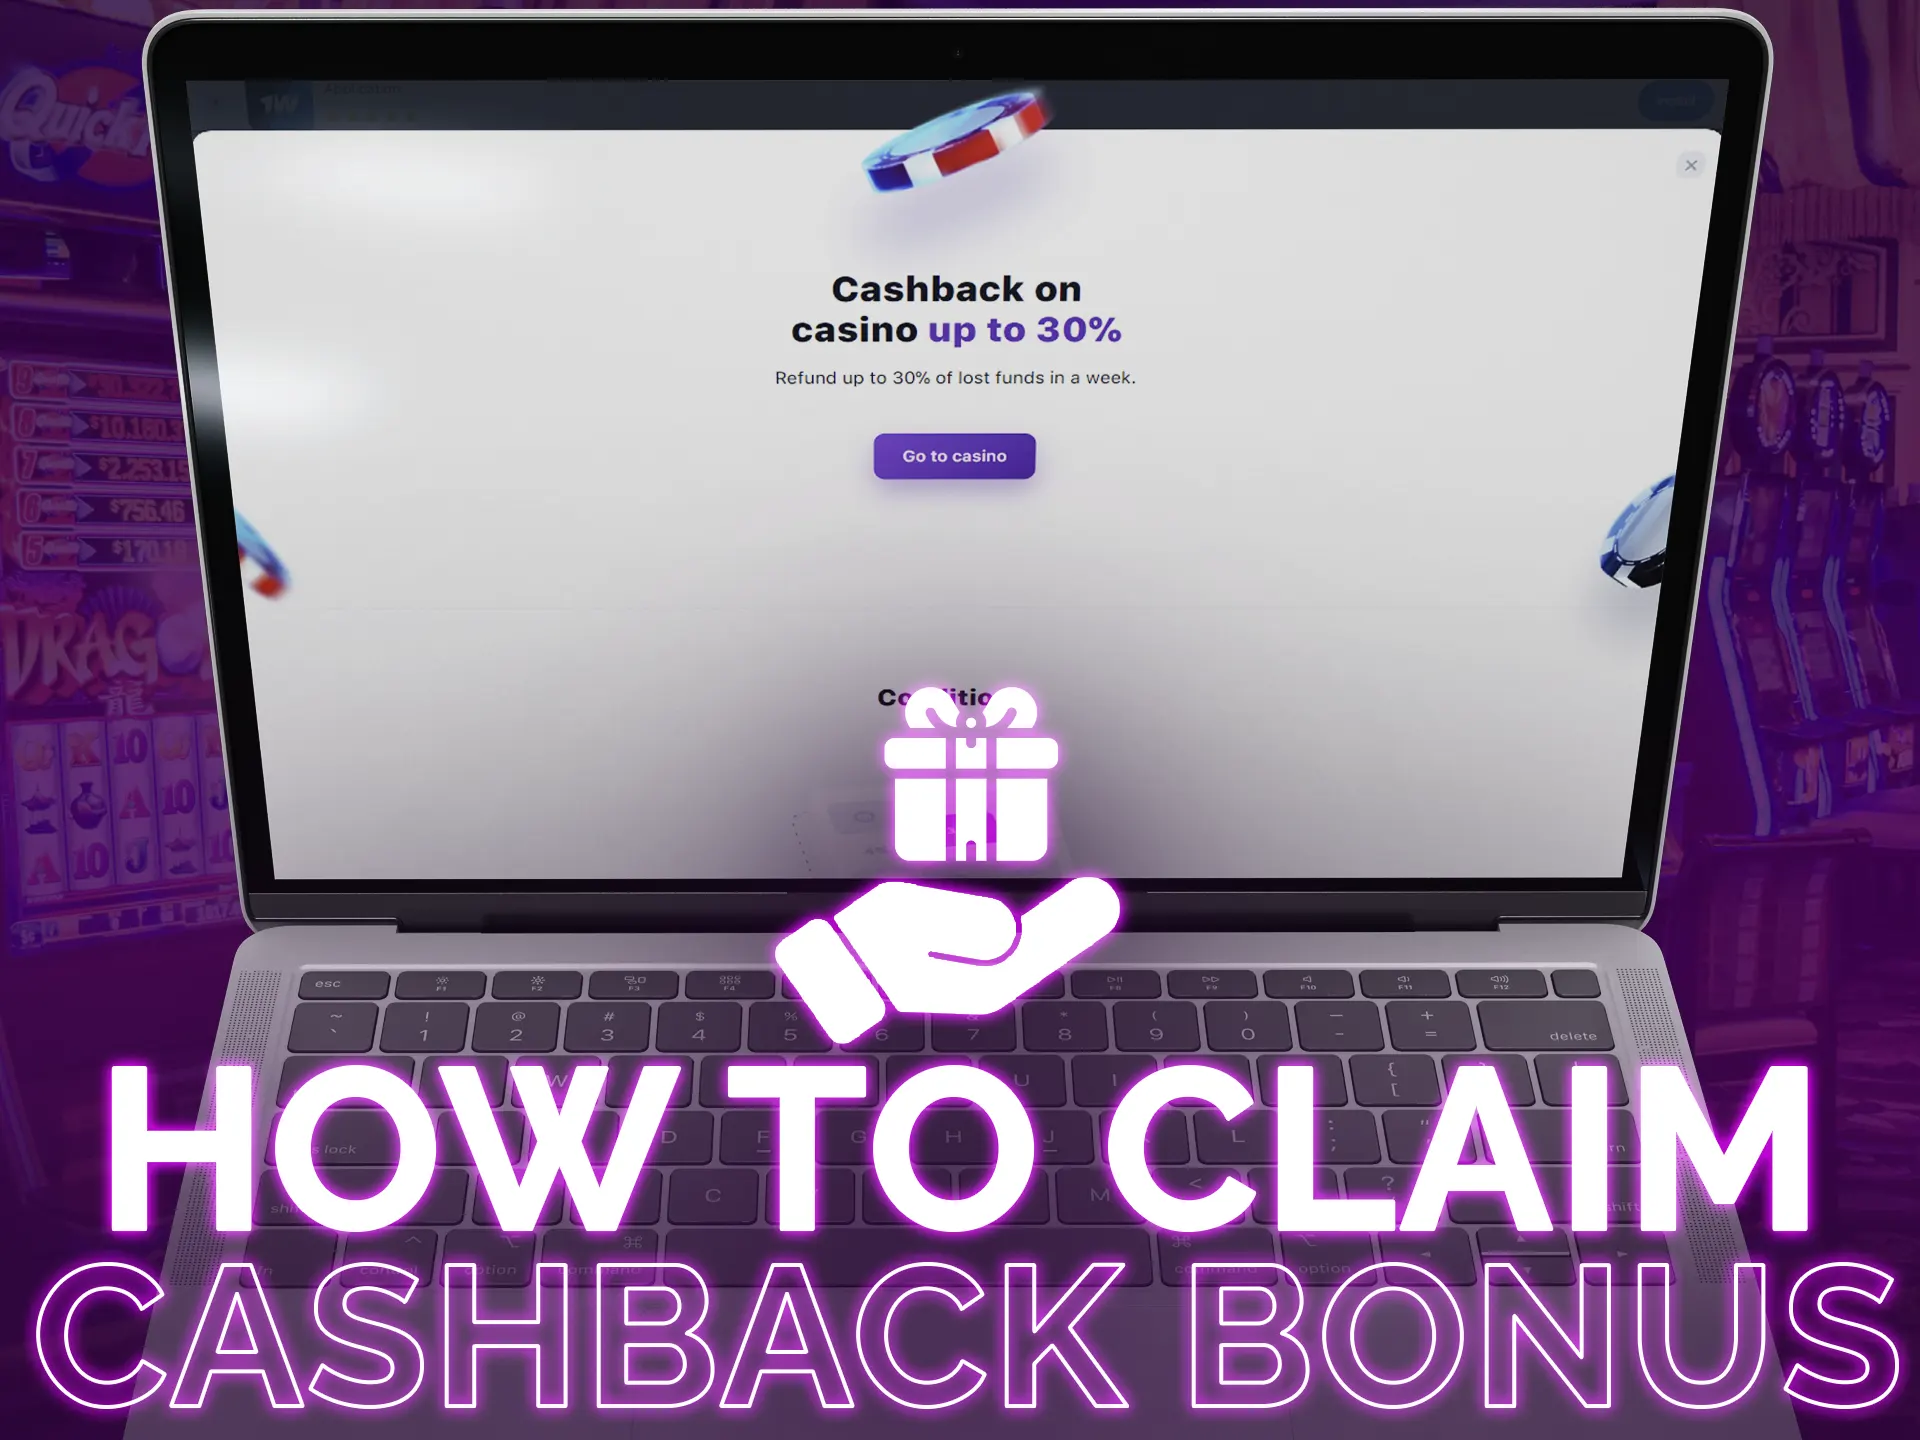 Learn how to claim cashback bonuses.